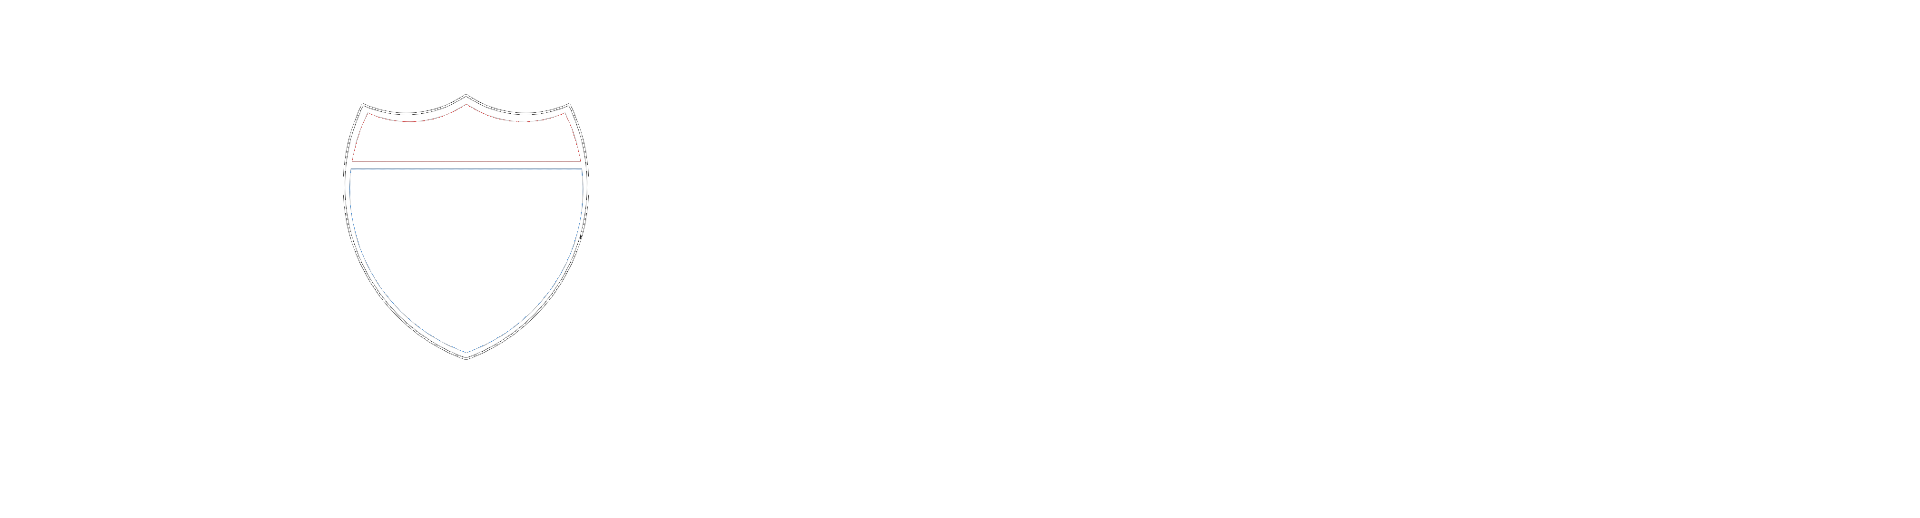 Programs: Begin the journey